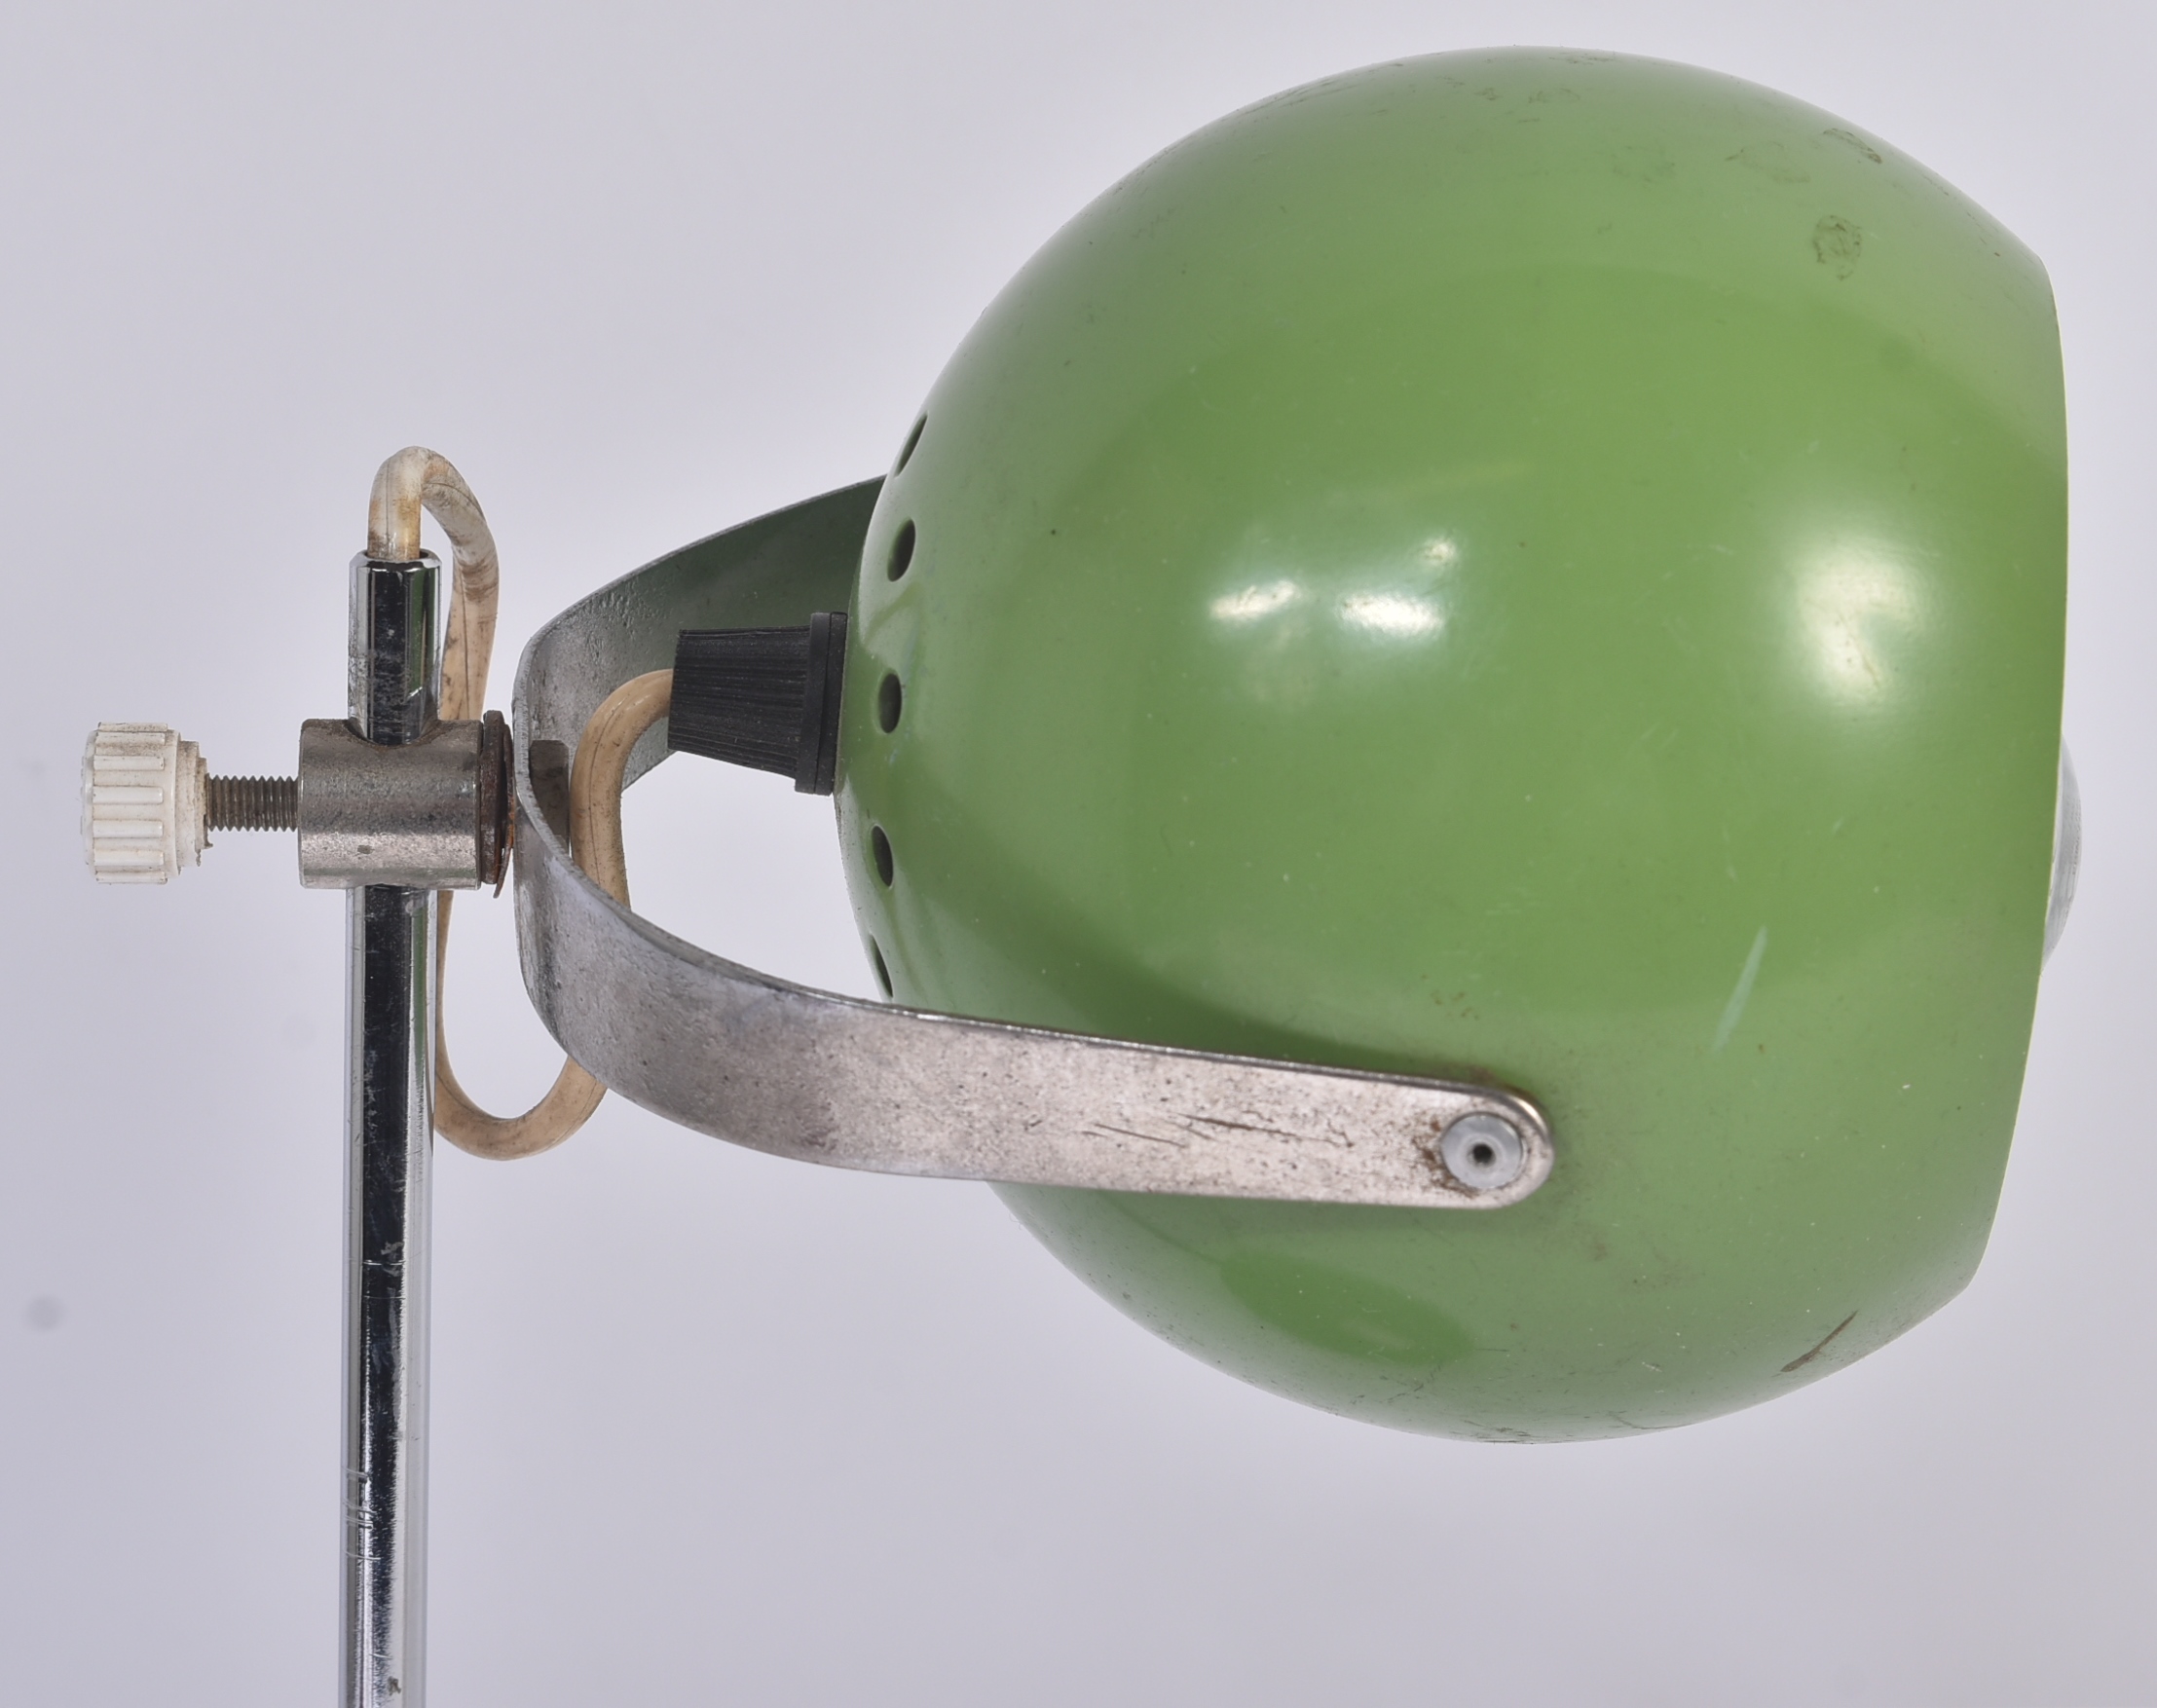 RETRO VINTAGE GREEN EYEBALL DESK LAMP - Image 3 of 4